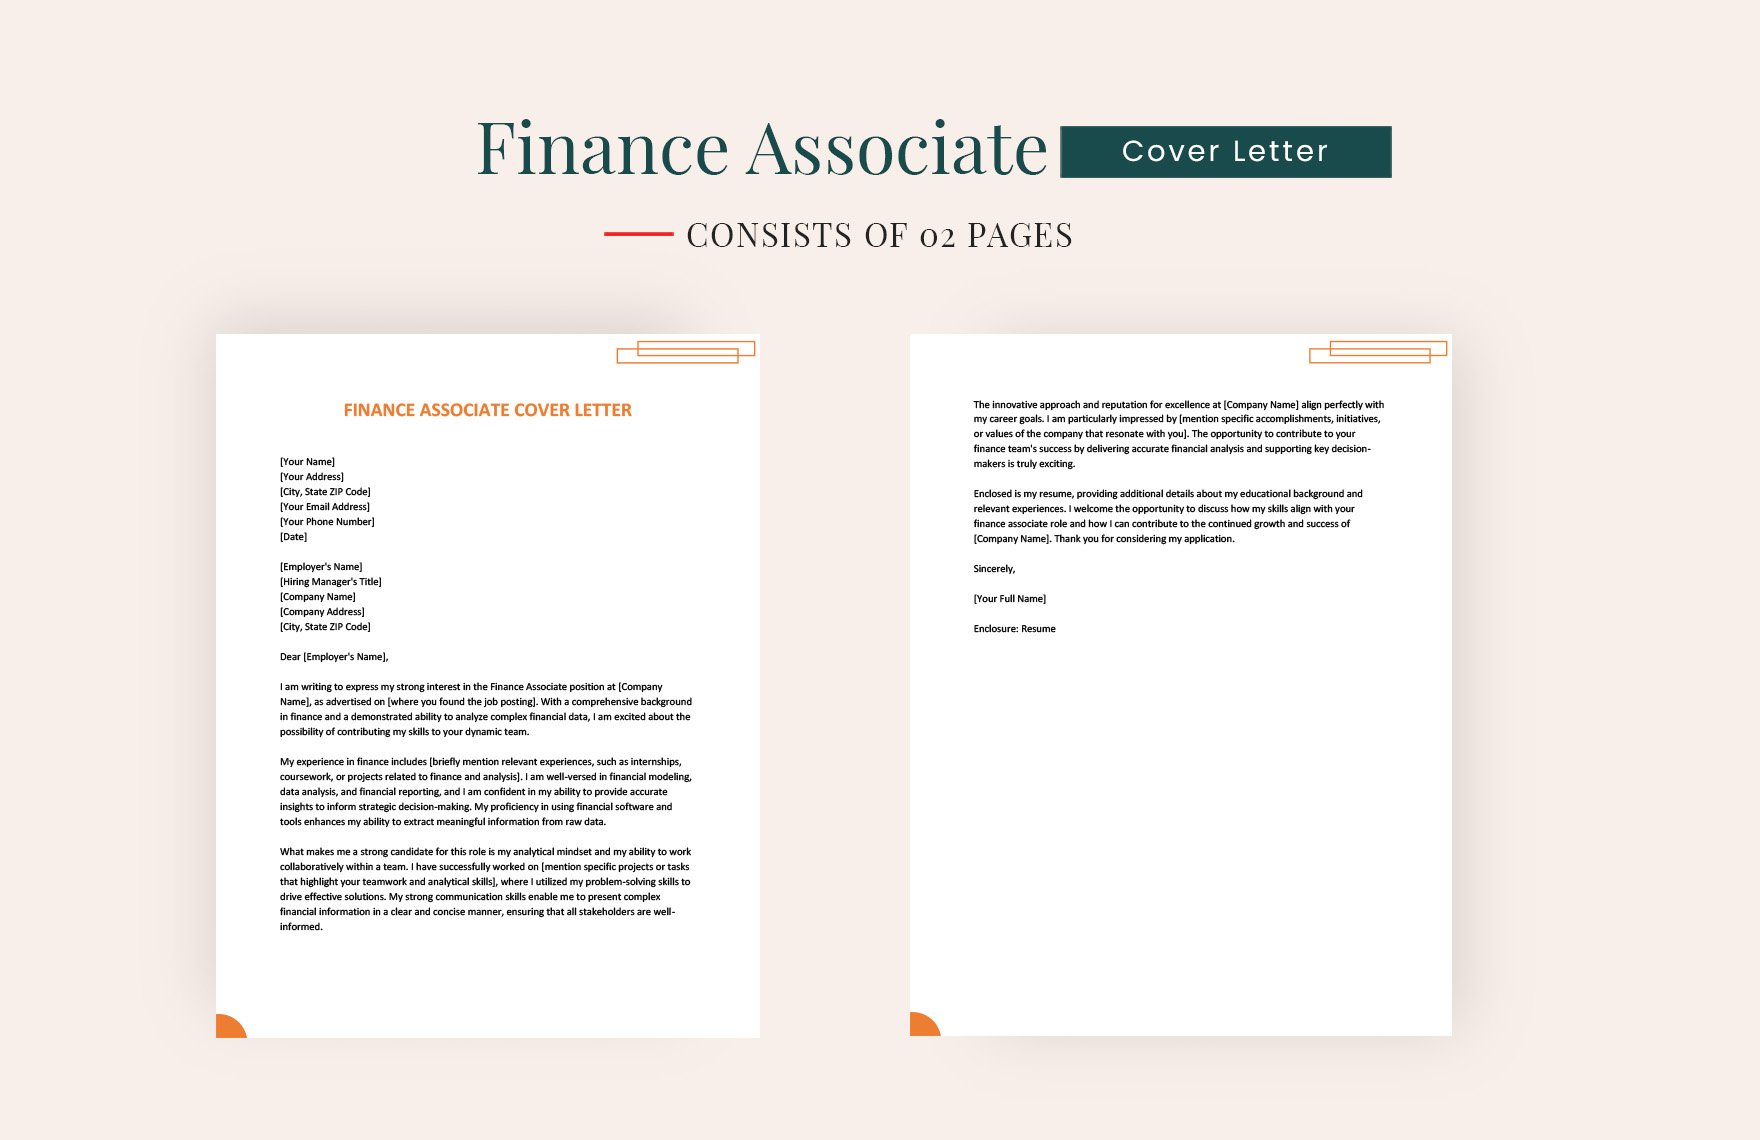 Finance Associate Cover Letter in Word, Google Docs